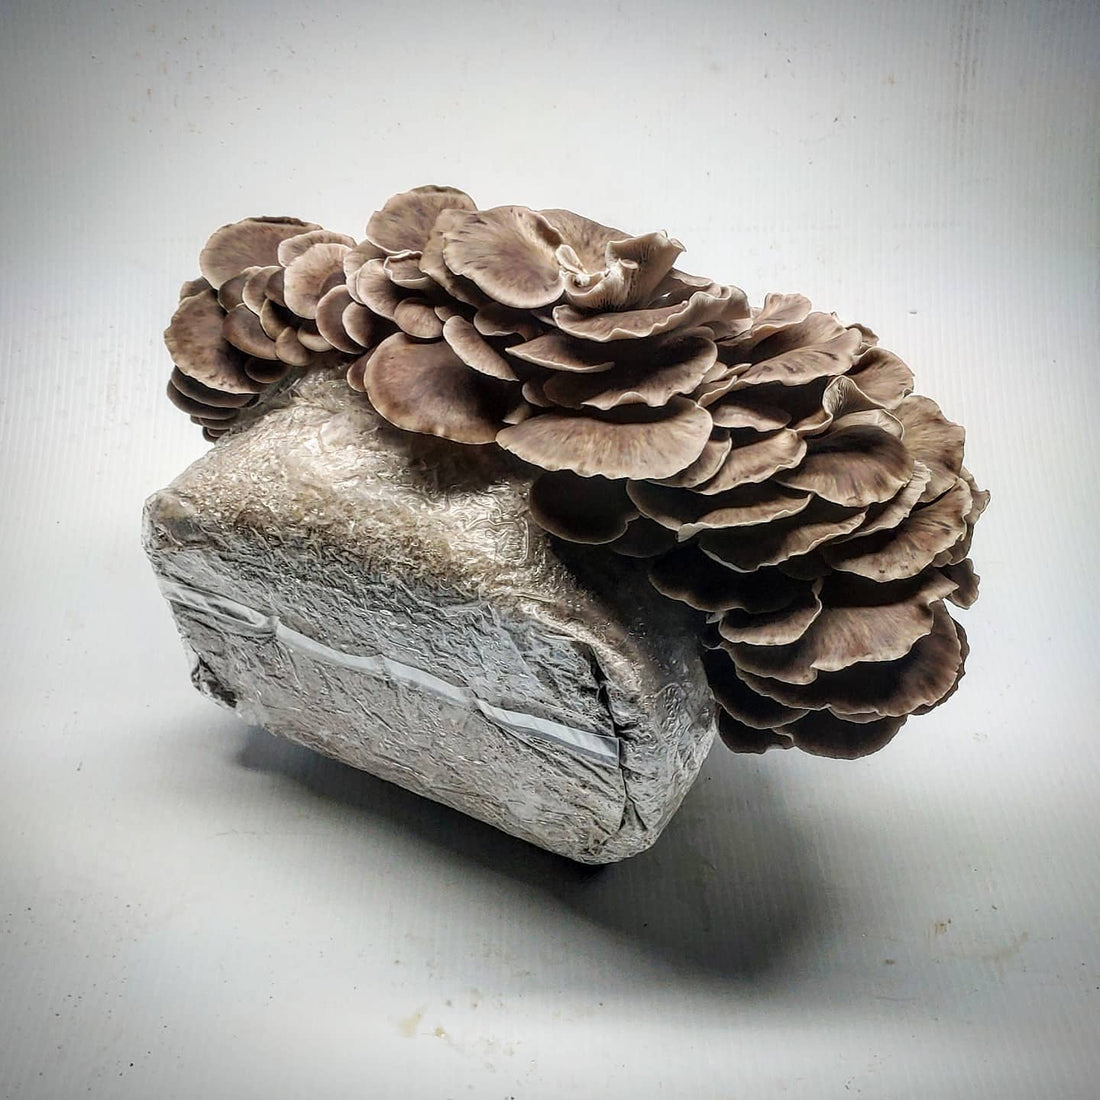 phoenix oyster mushroom